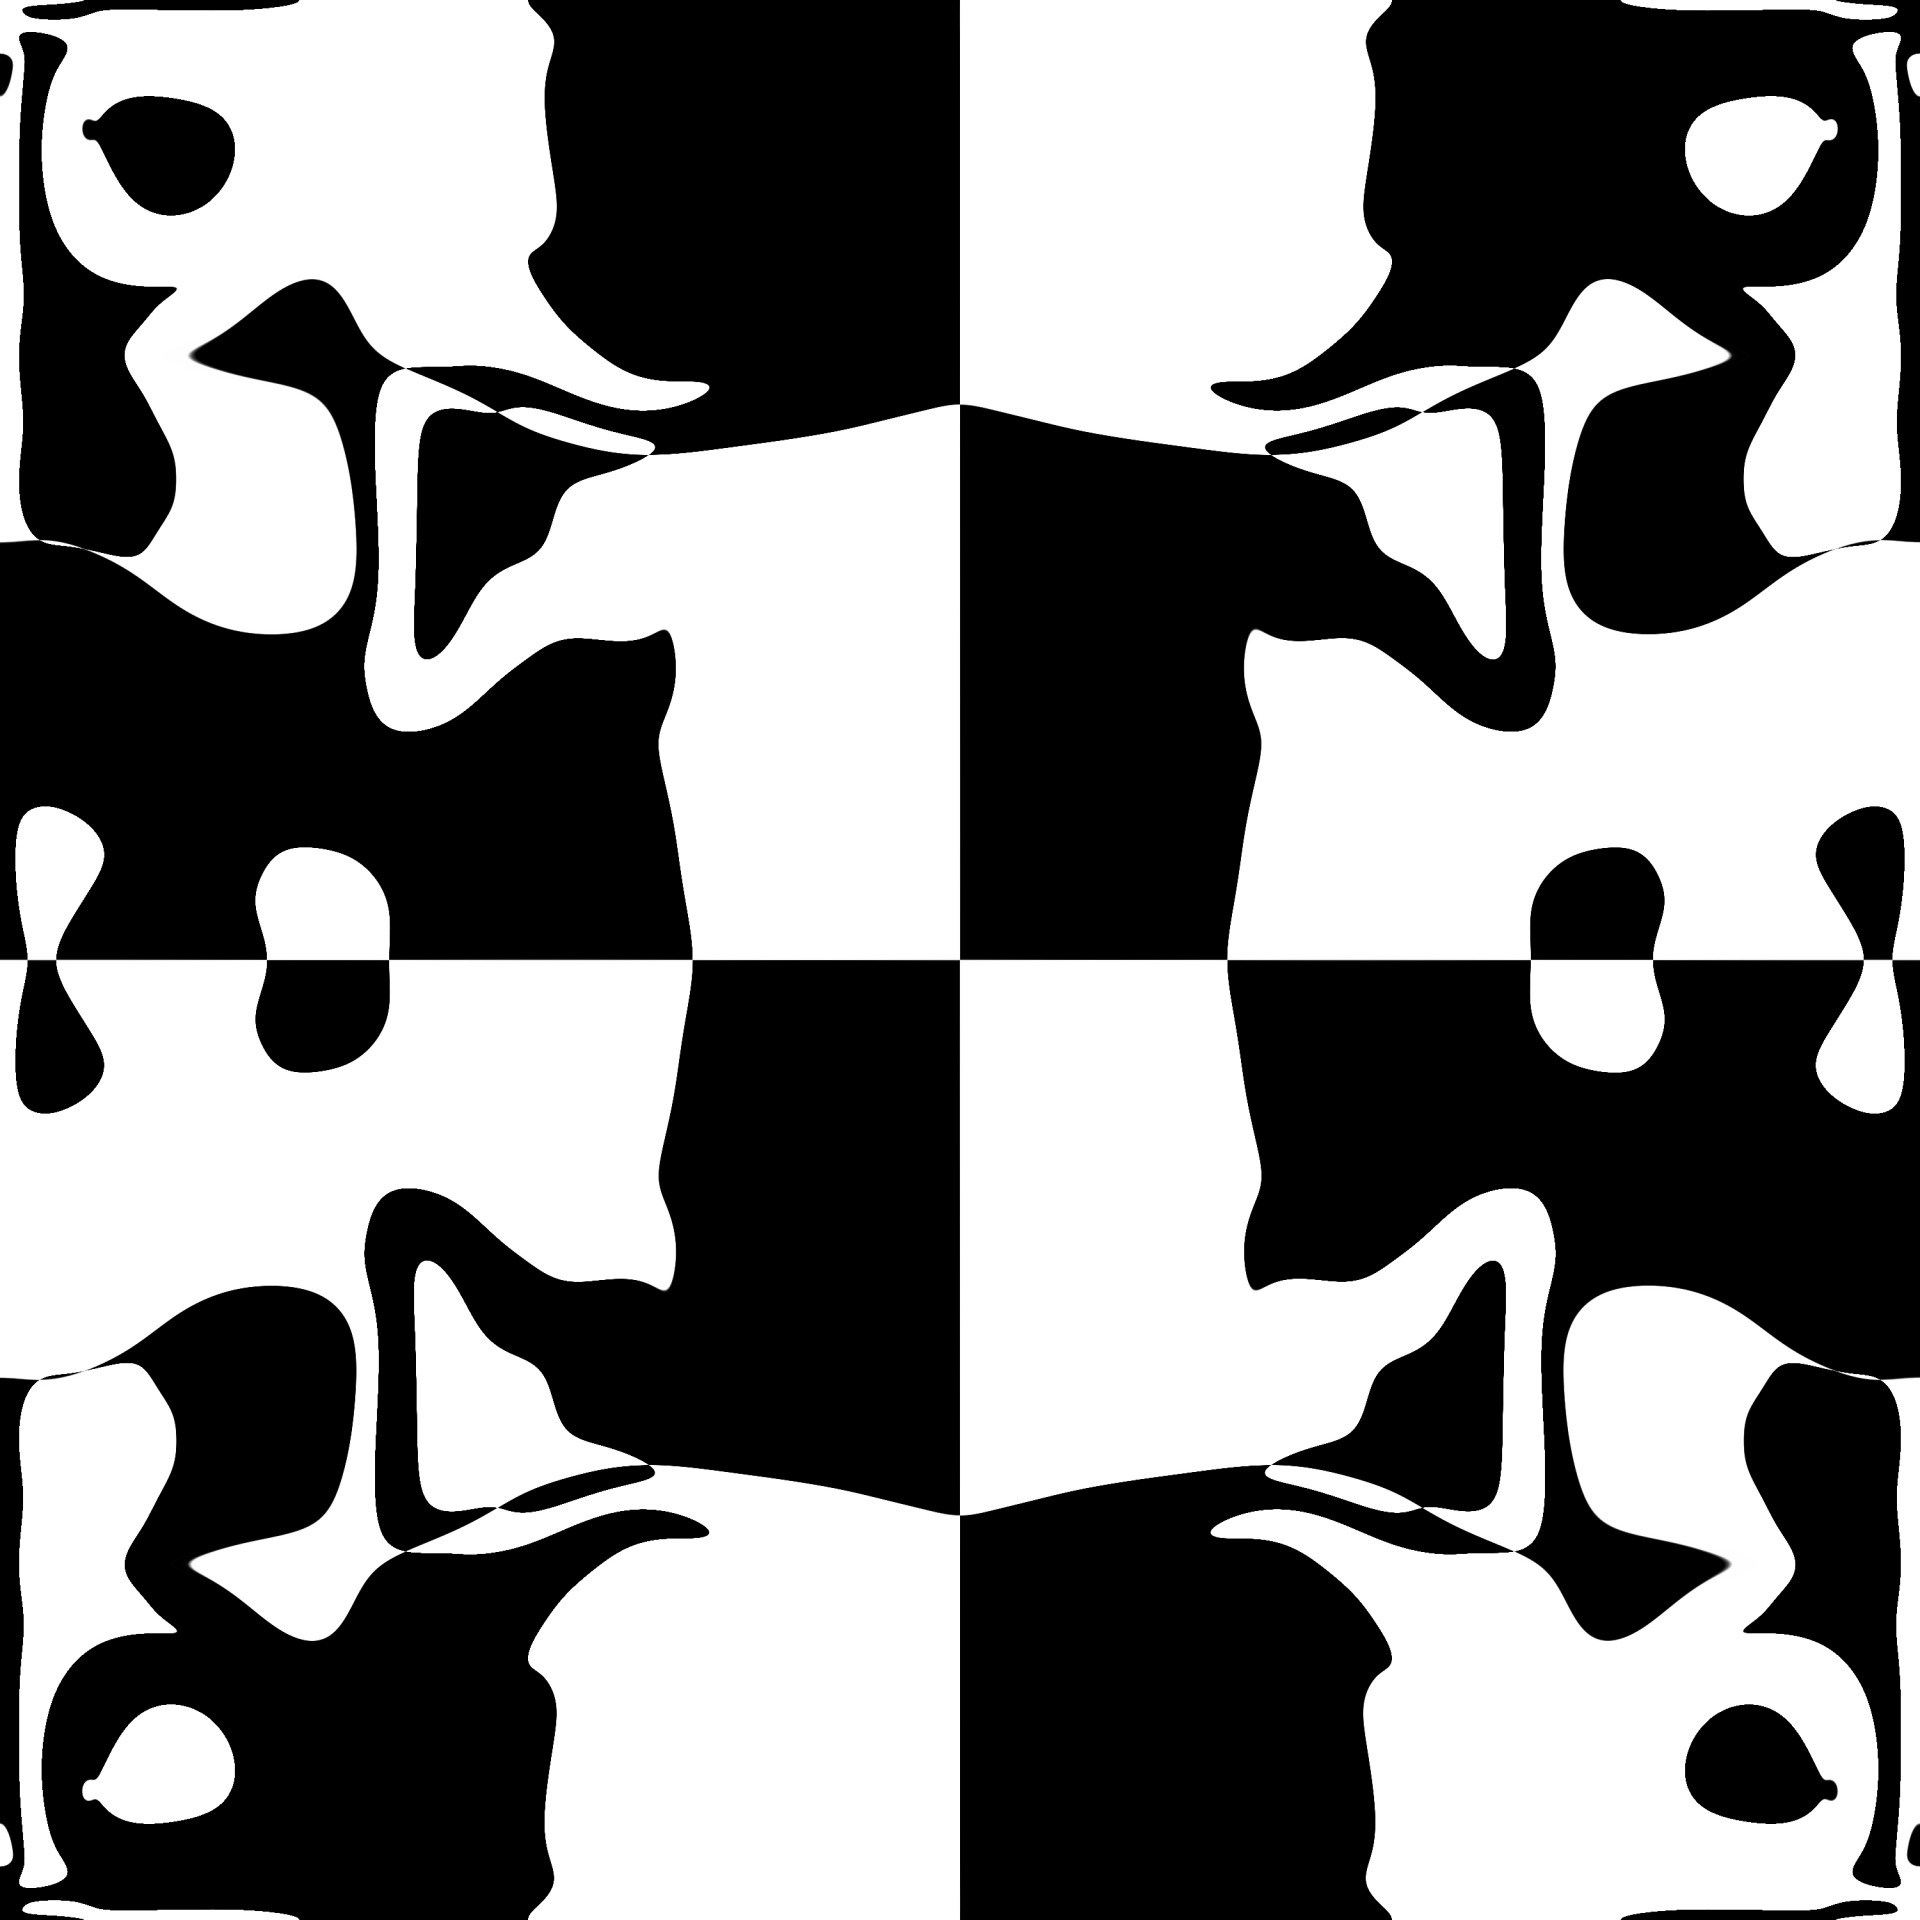 kaleidoscope checkered checkers free photo